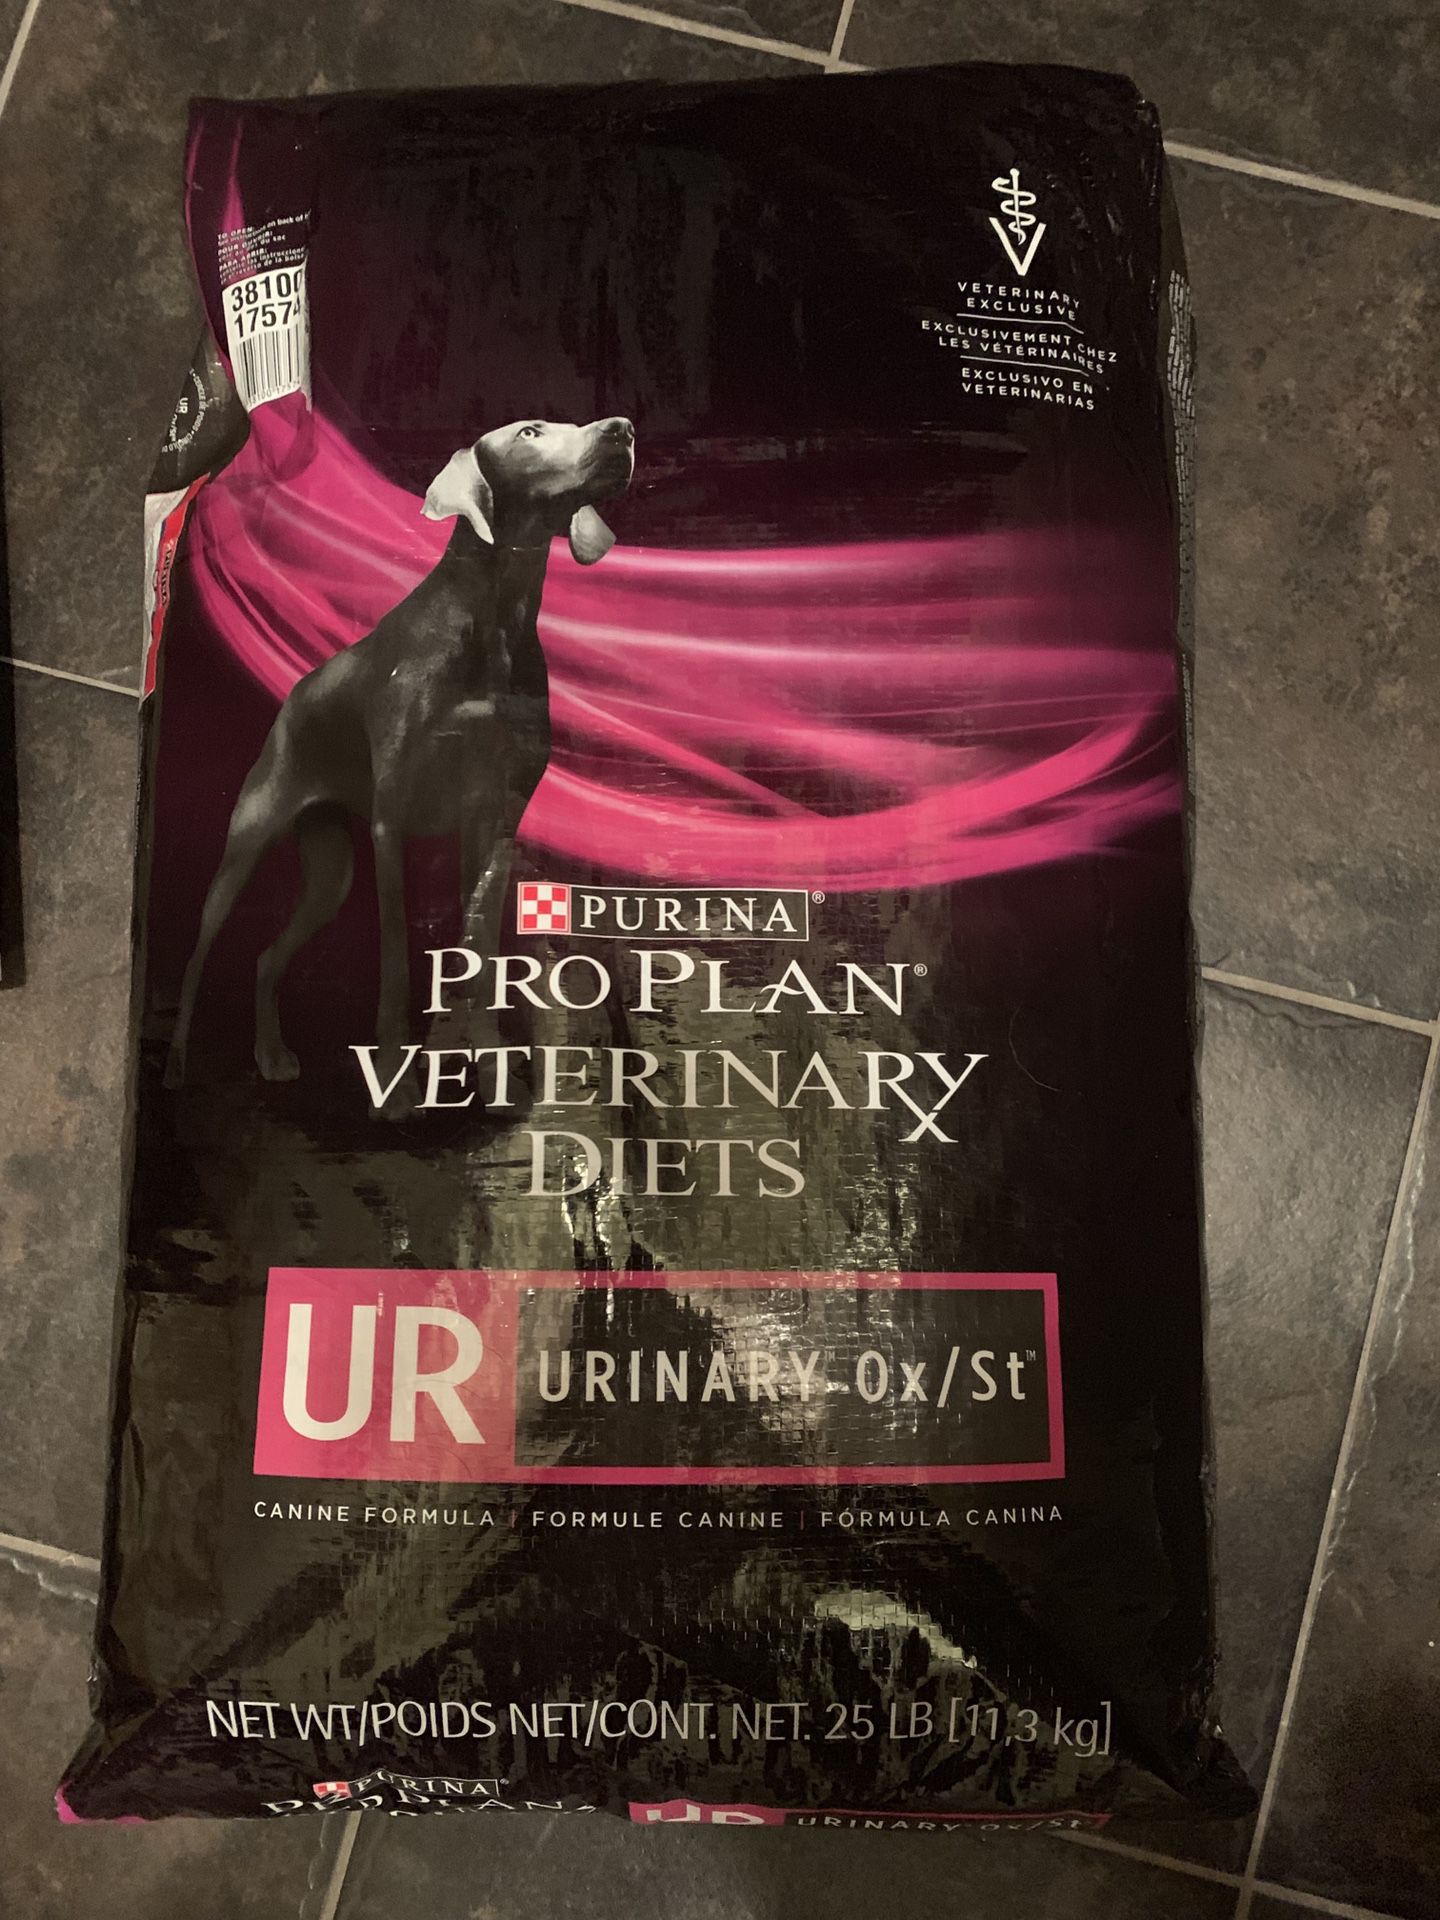 Purina Pro Plan UR urinary dog food